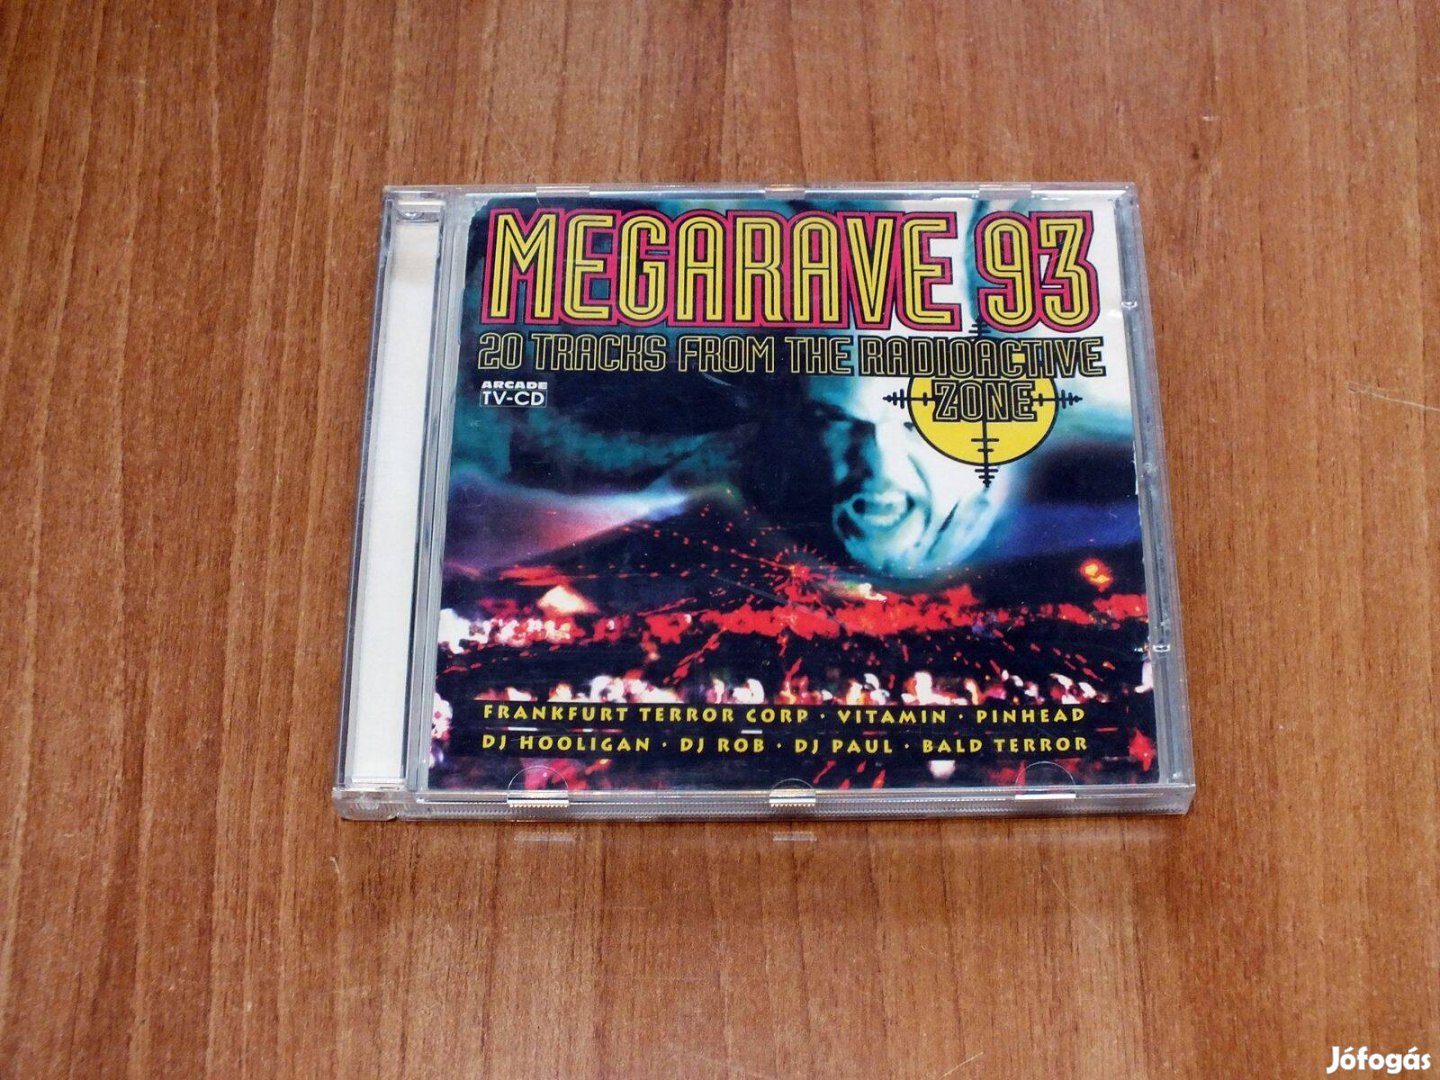 Megarave '93 cd